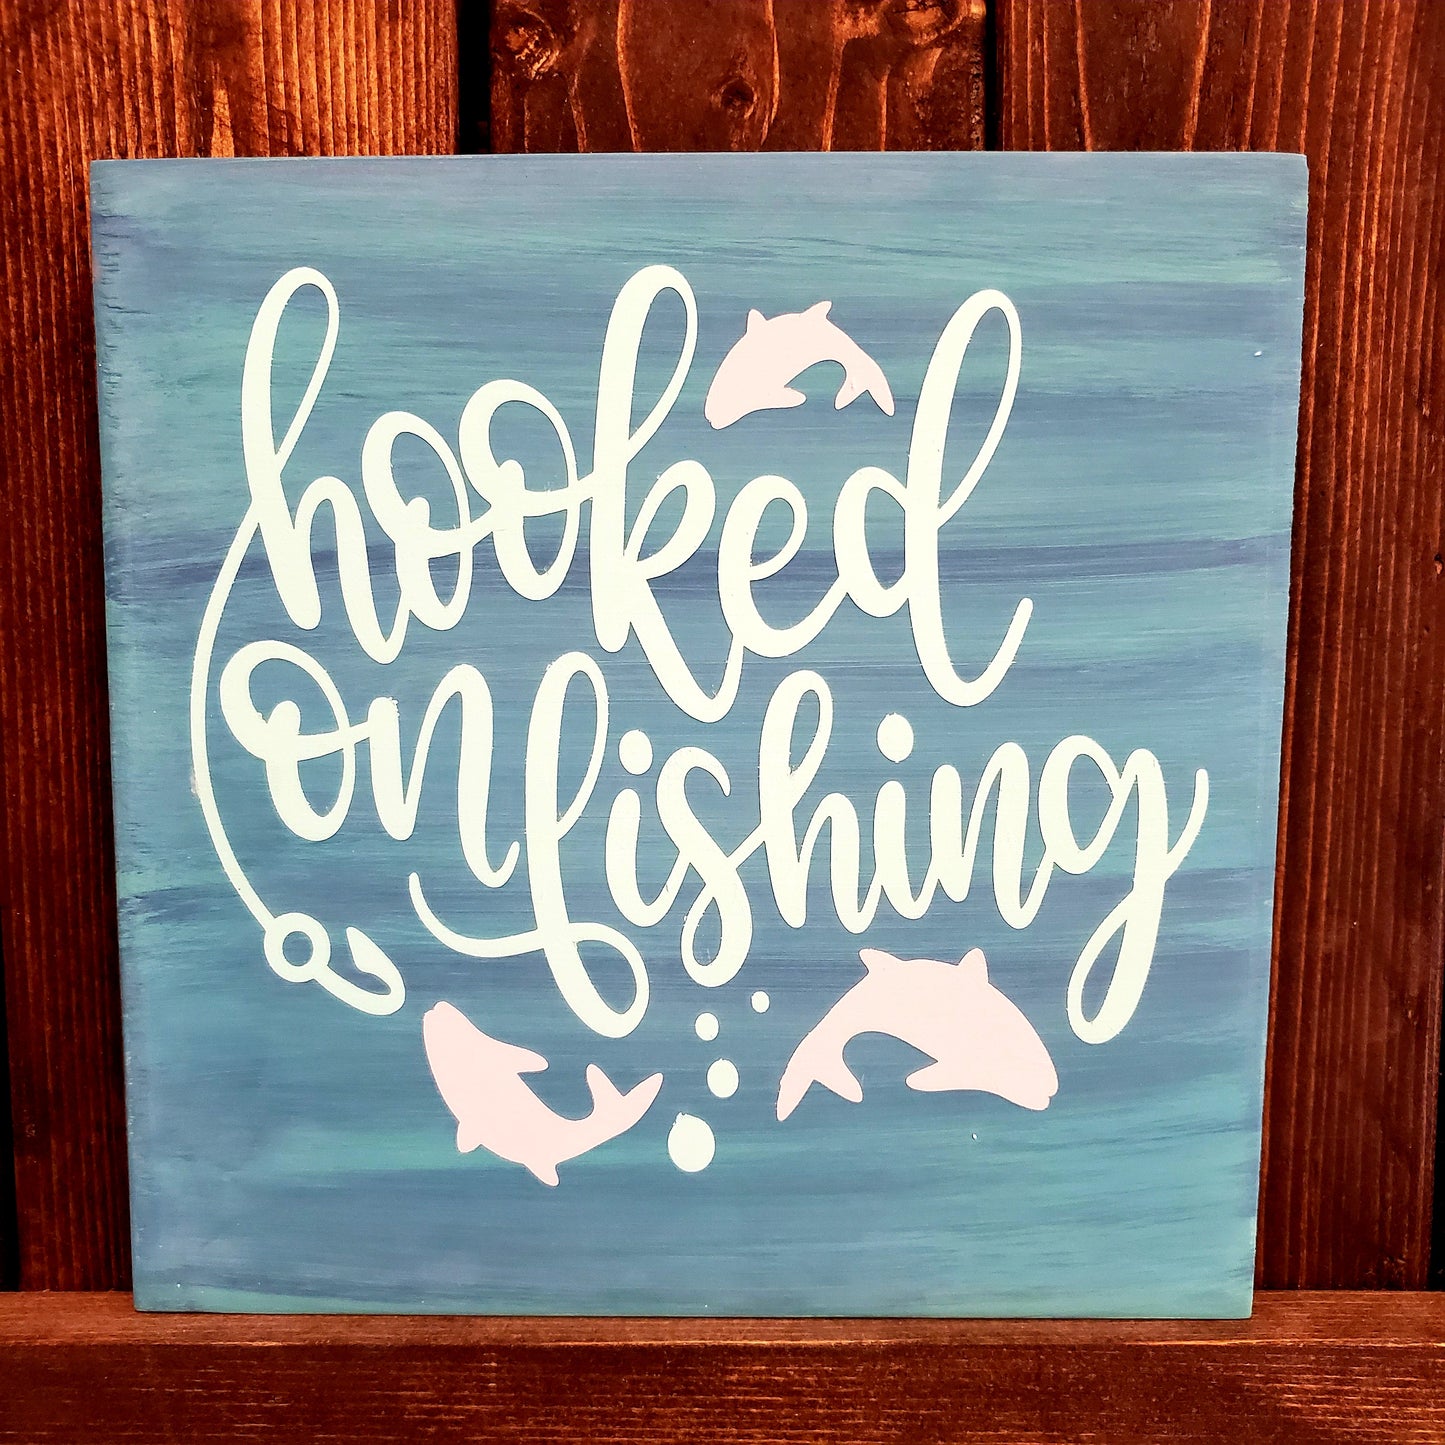 Hooked On Fishing: MINI DESIGN - Paisley Grace Makery